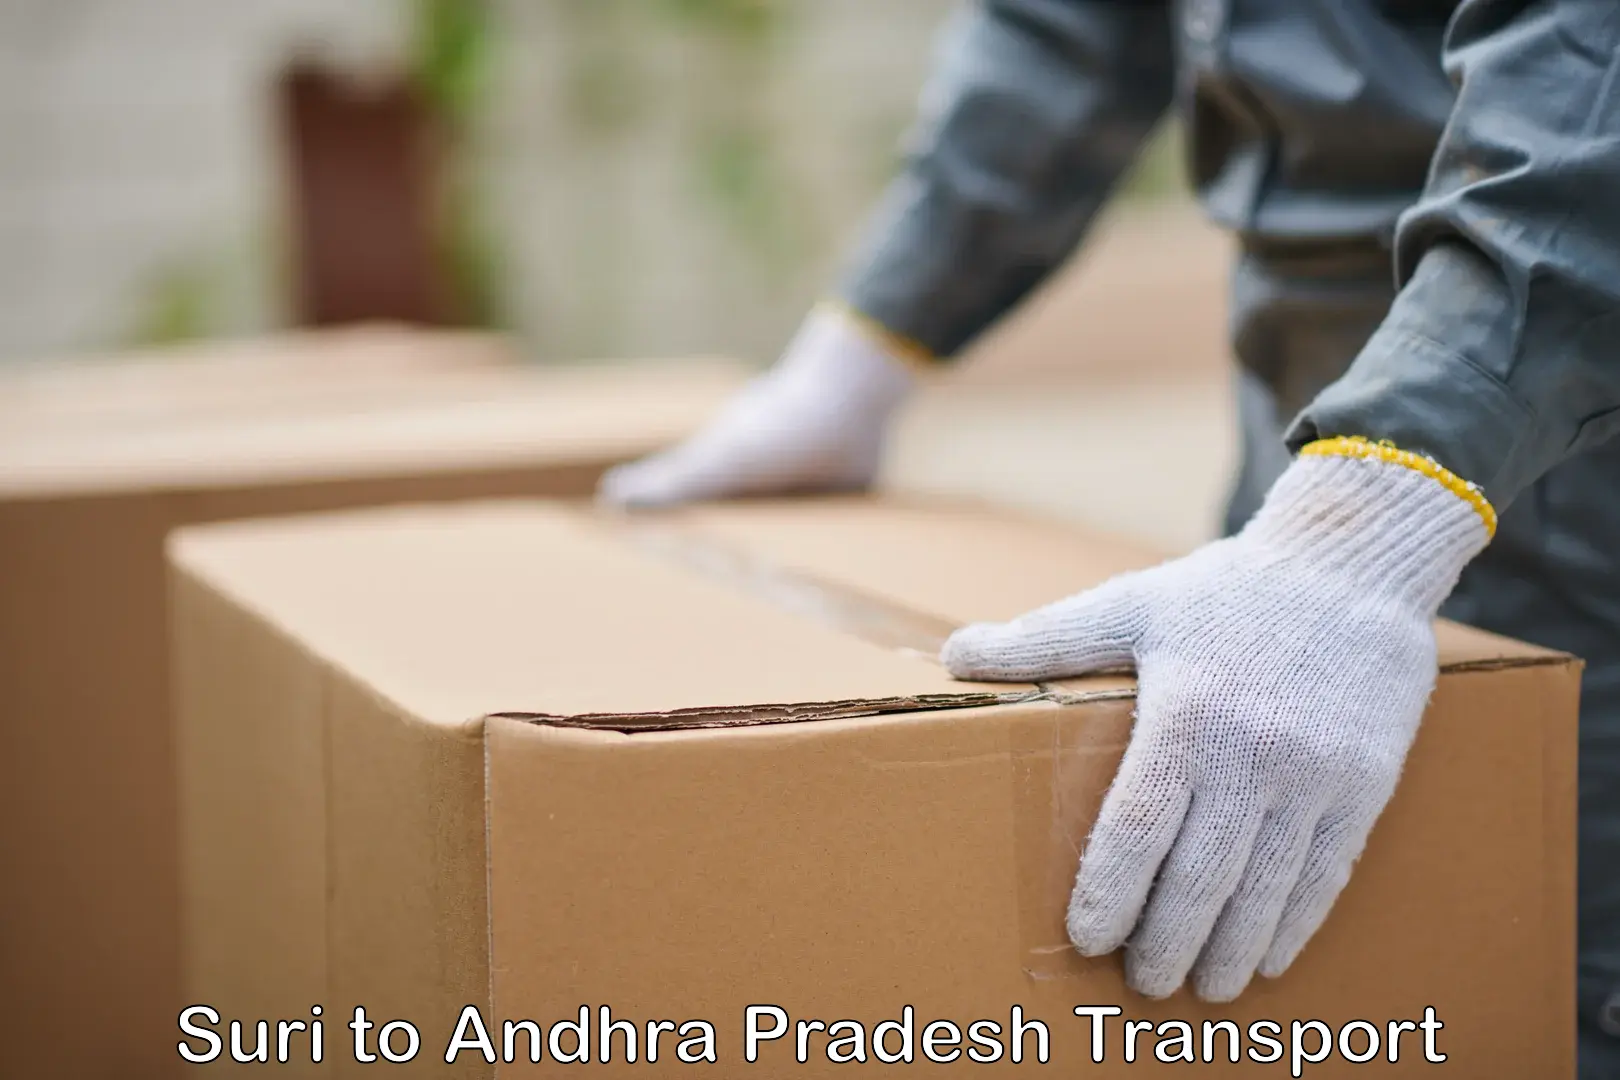 Online transport service Suri to Andhra Pradesh